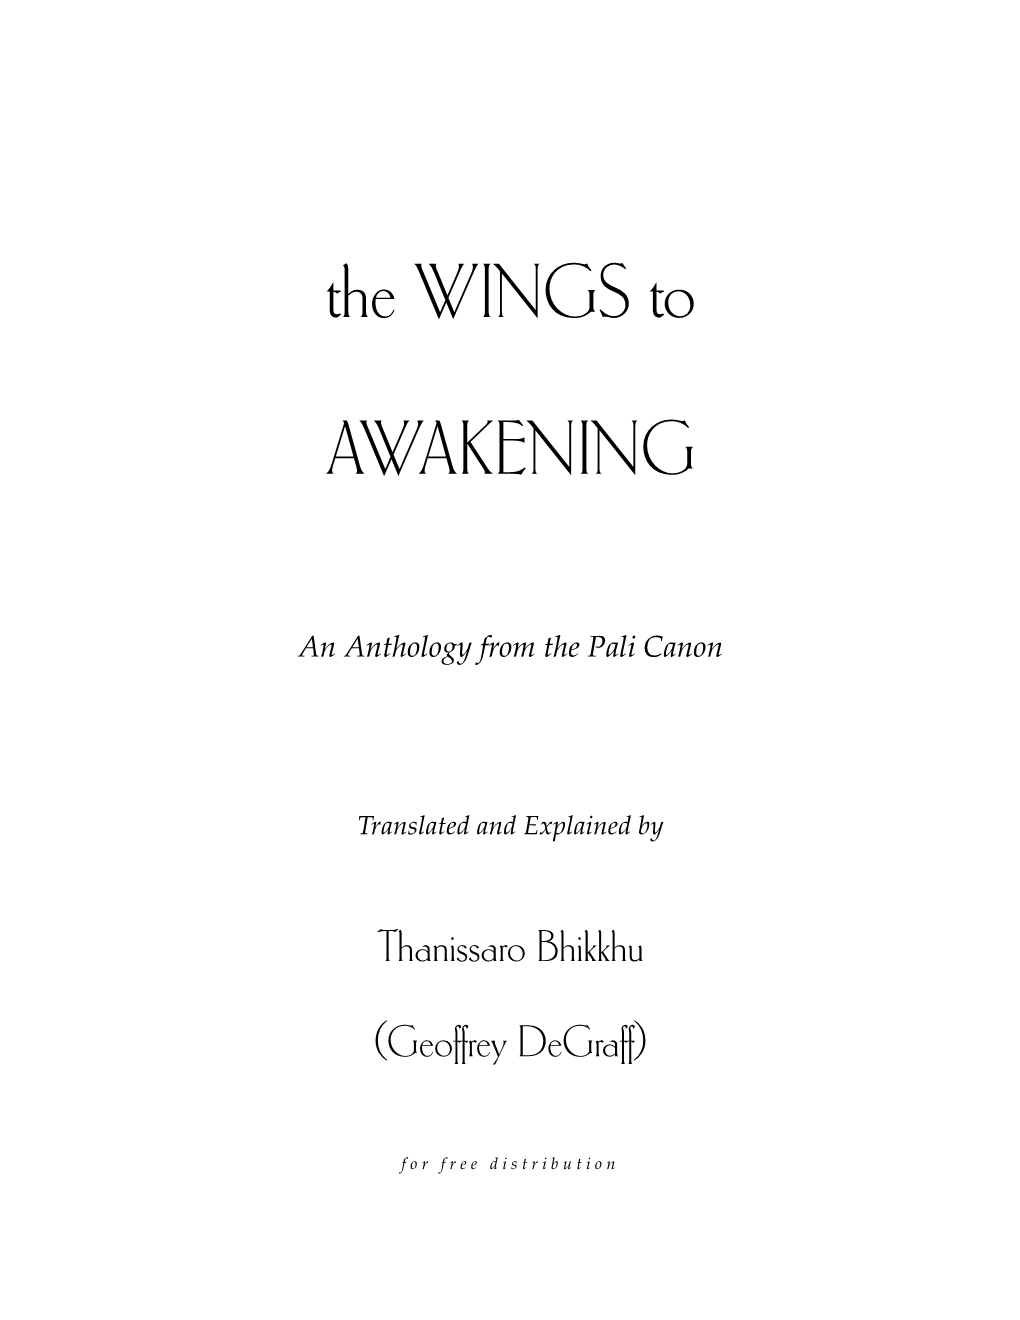 The Wings to Awakening I